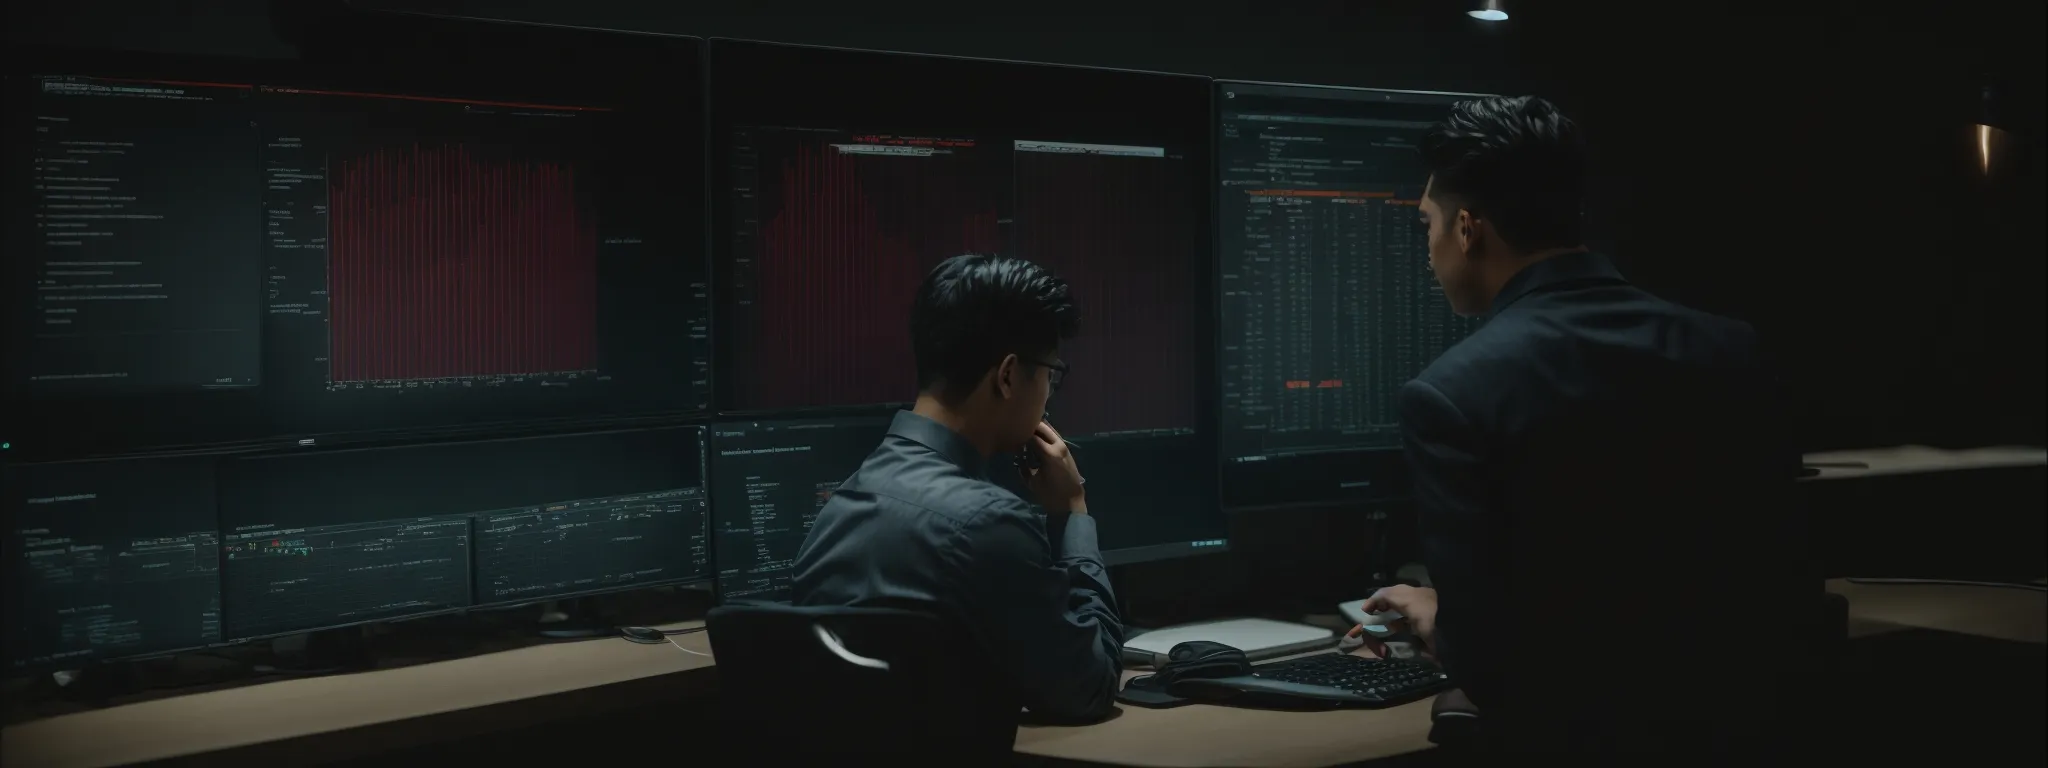 a marketer analyzing data on a computer screen to enhance seo tactics.